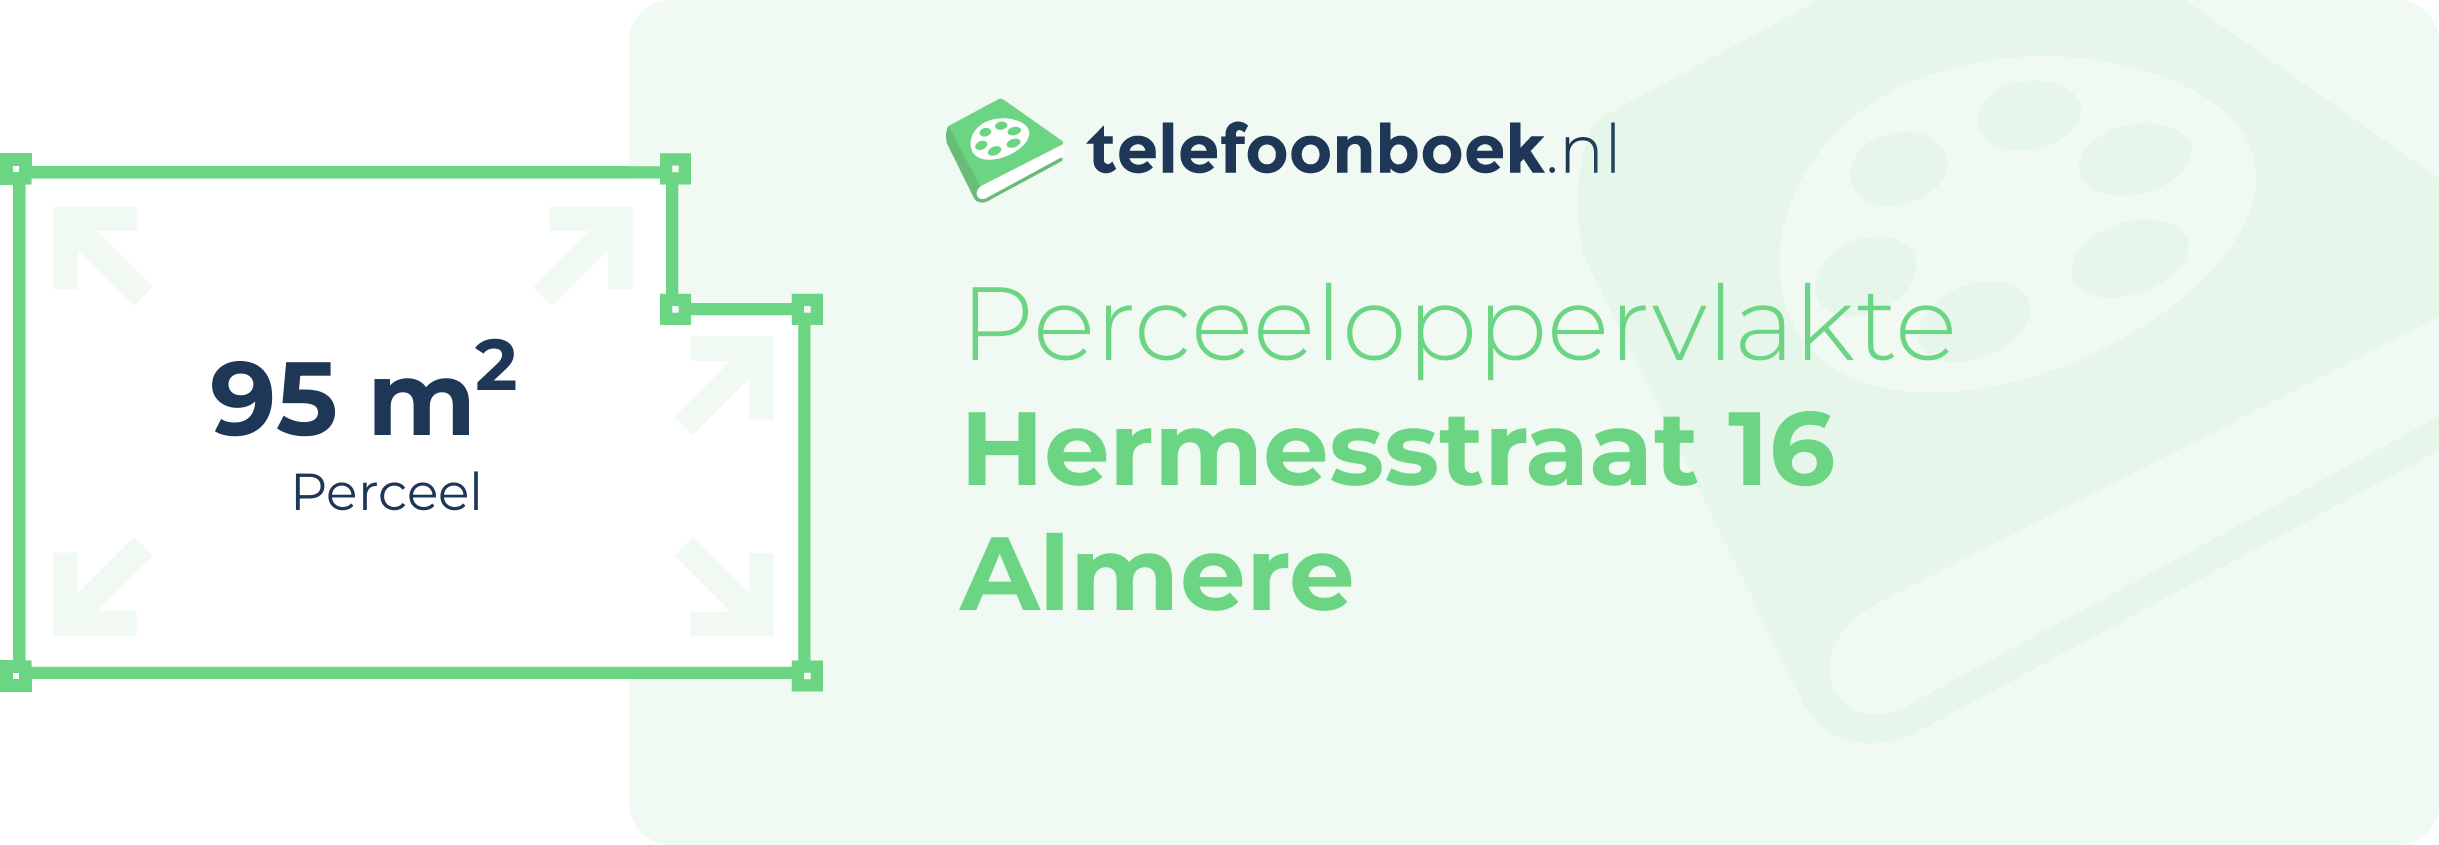 Perceeloppervlakte Hermesstraat 16 Almere